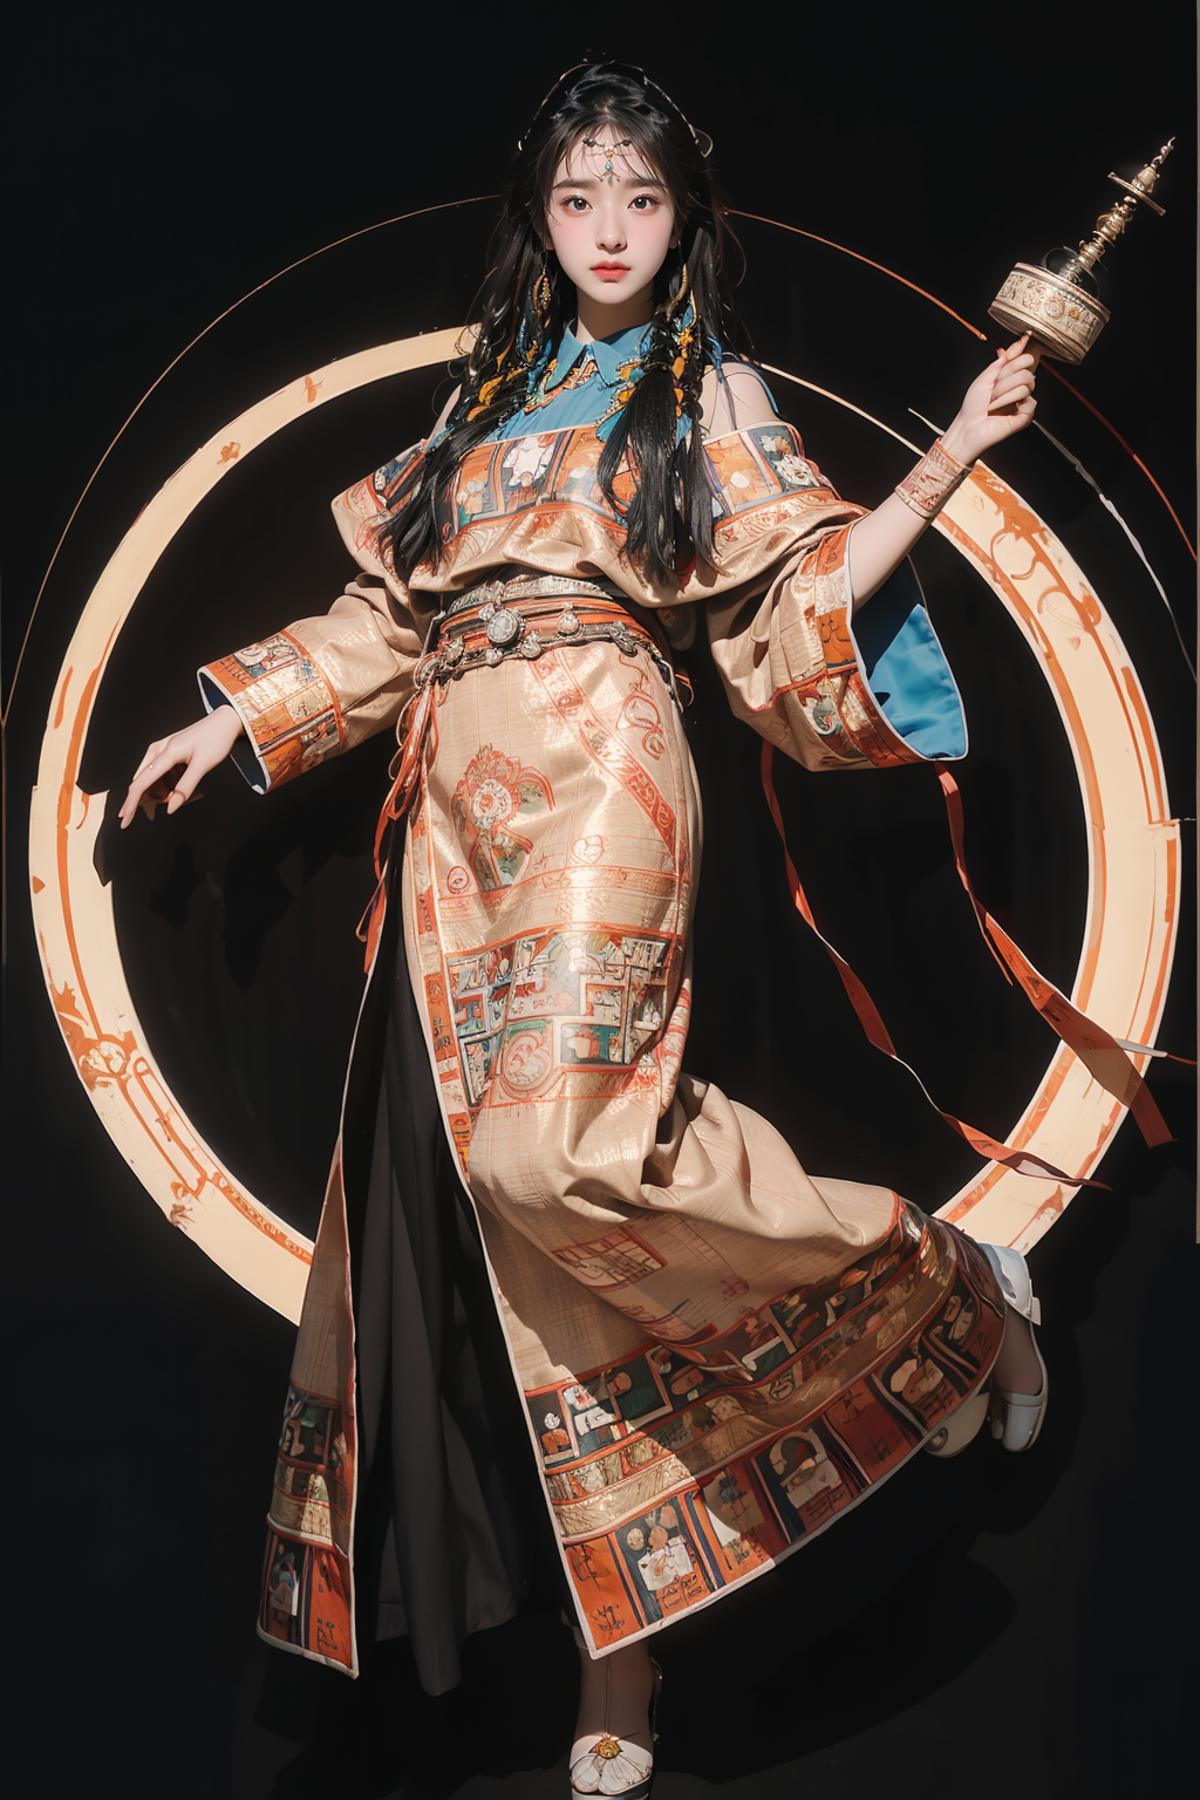 Tibetan clothing image by ruanyi